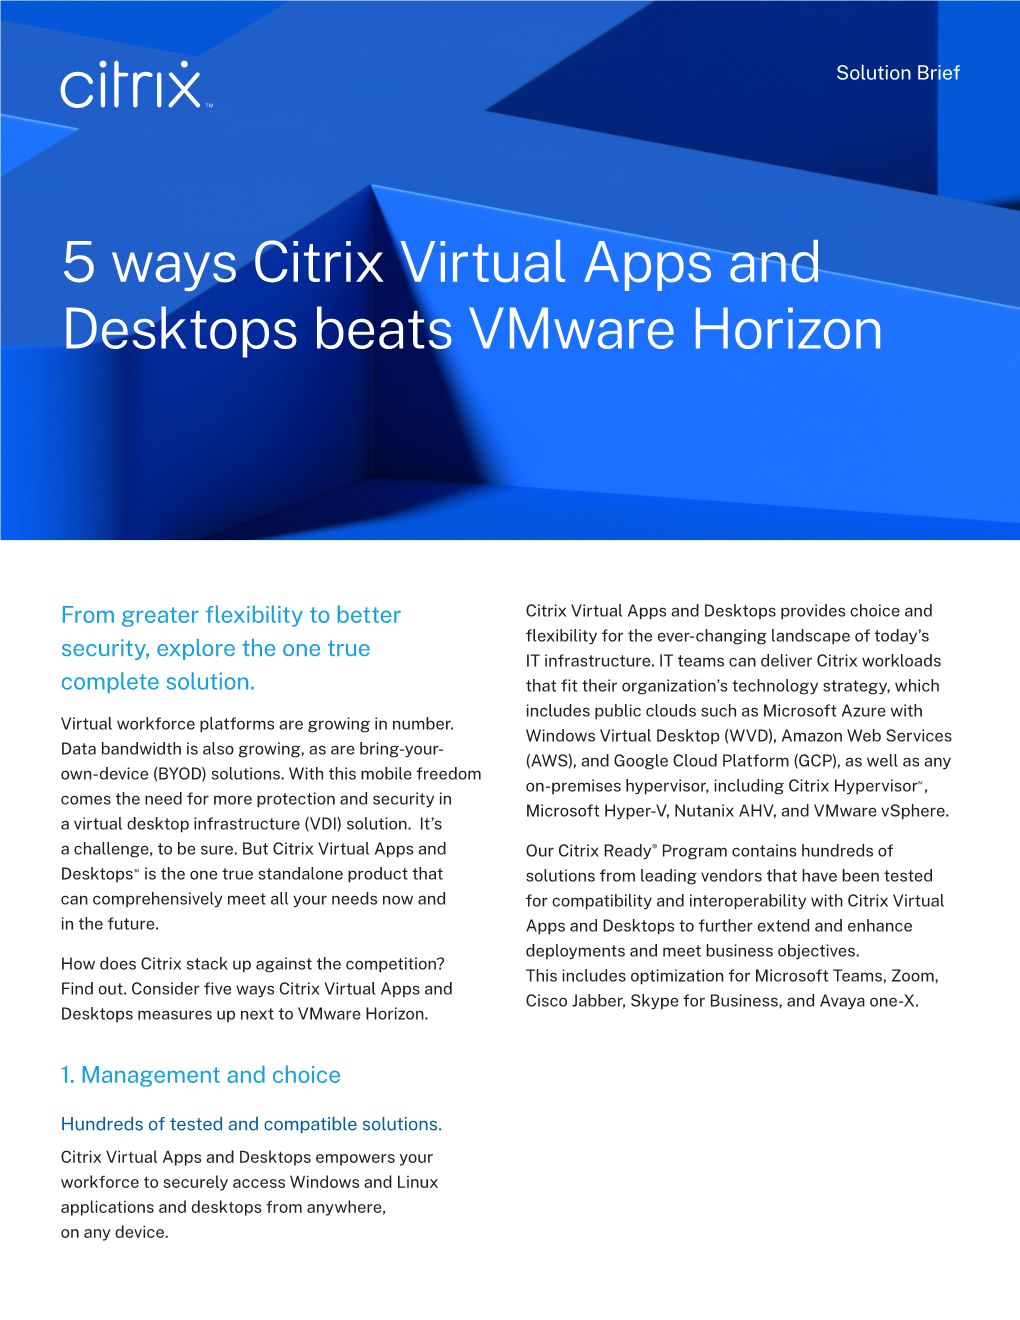 5 Ways Citrix Virtual Apps and Desktops Beats Vmware Horizon